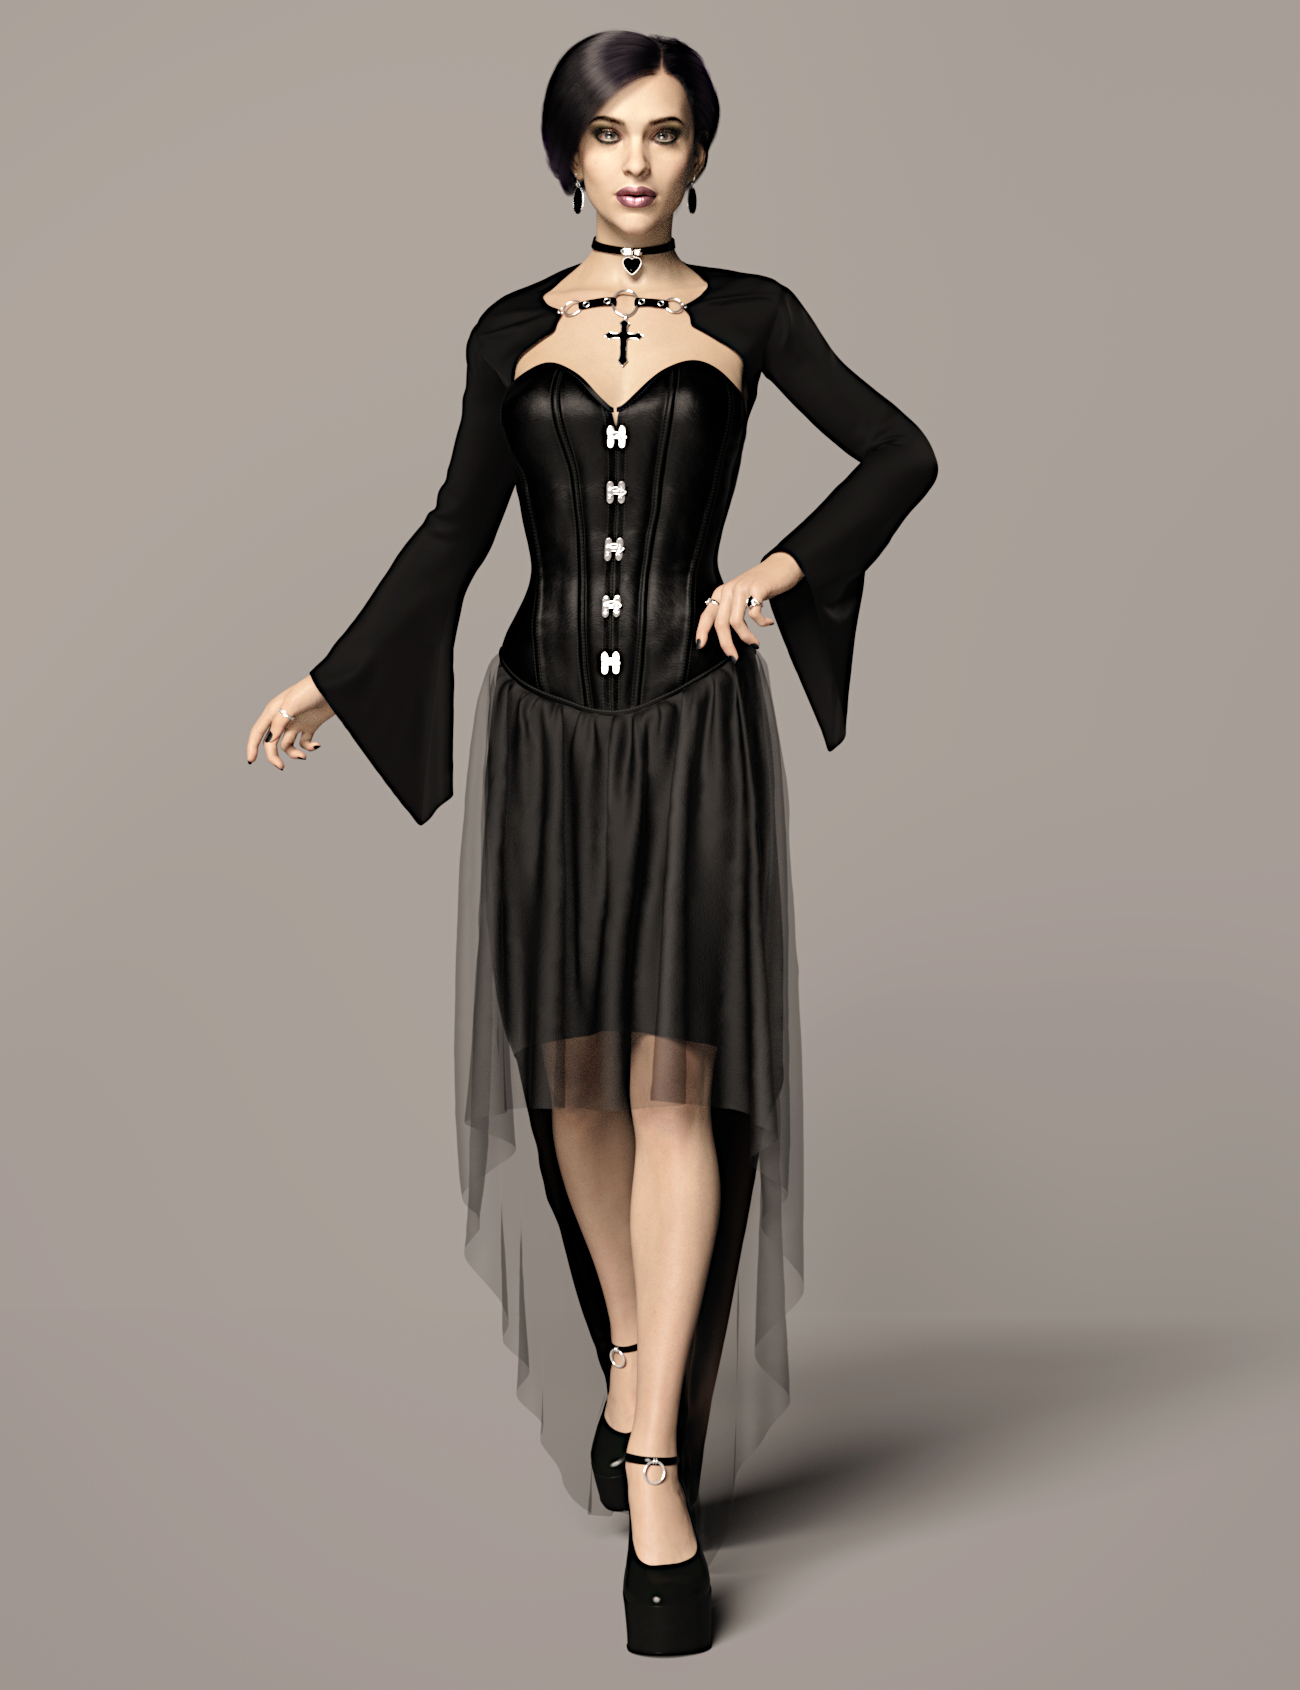 dForce Dark Vamp Outfit for Genesis 8 and 8.1 Females